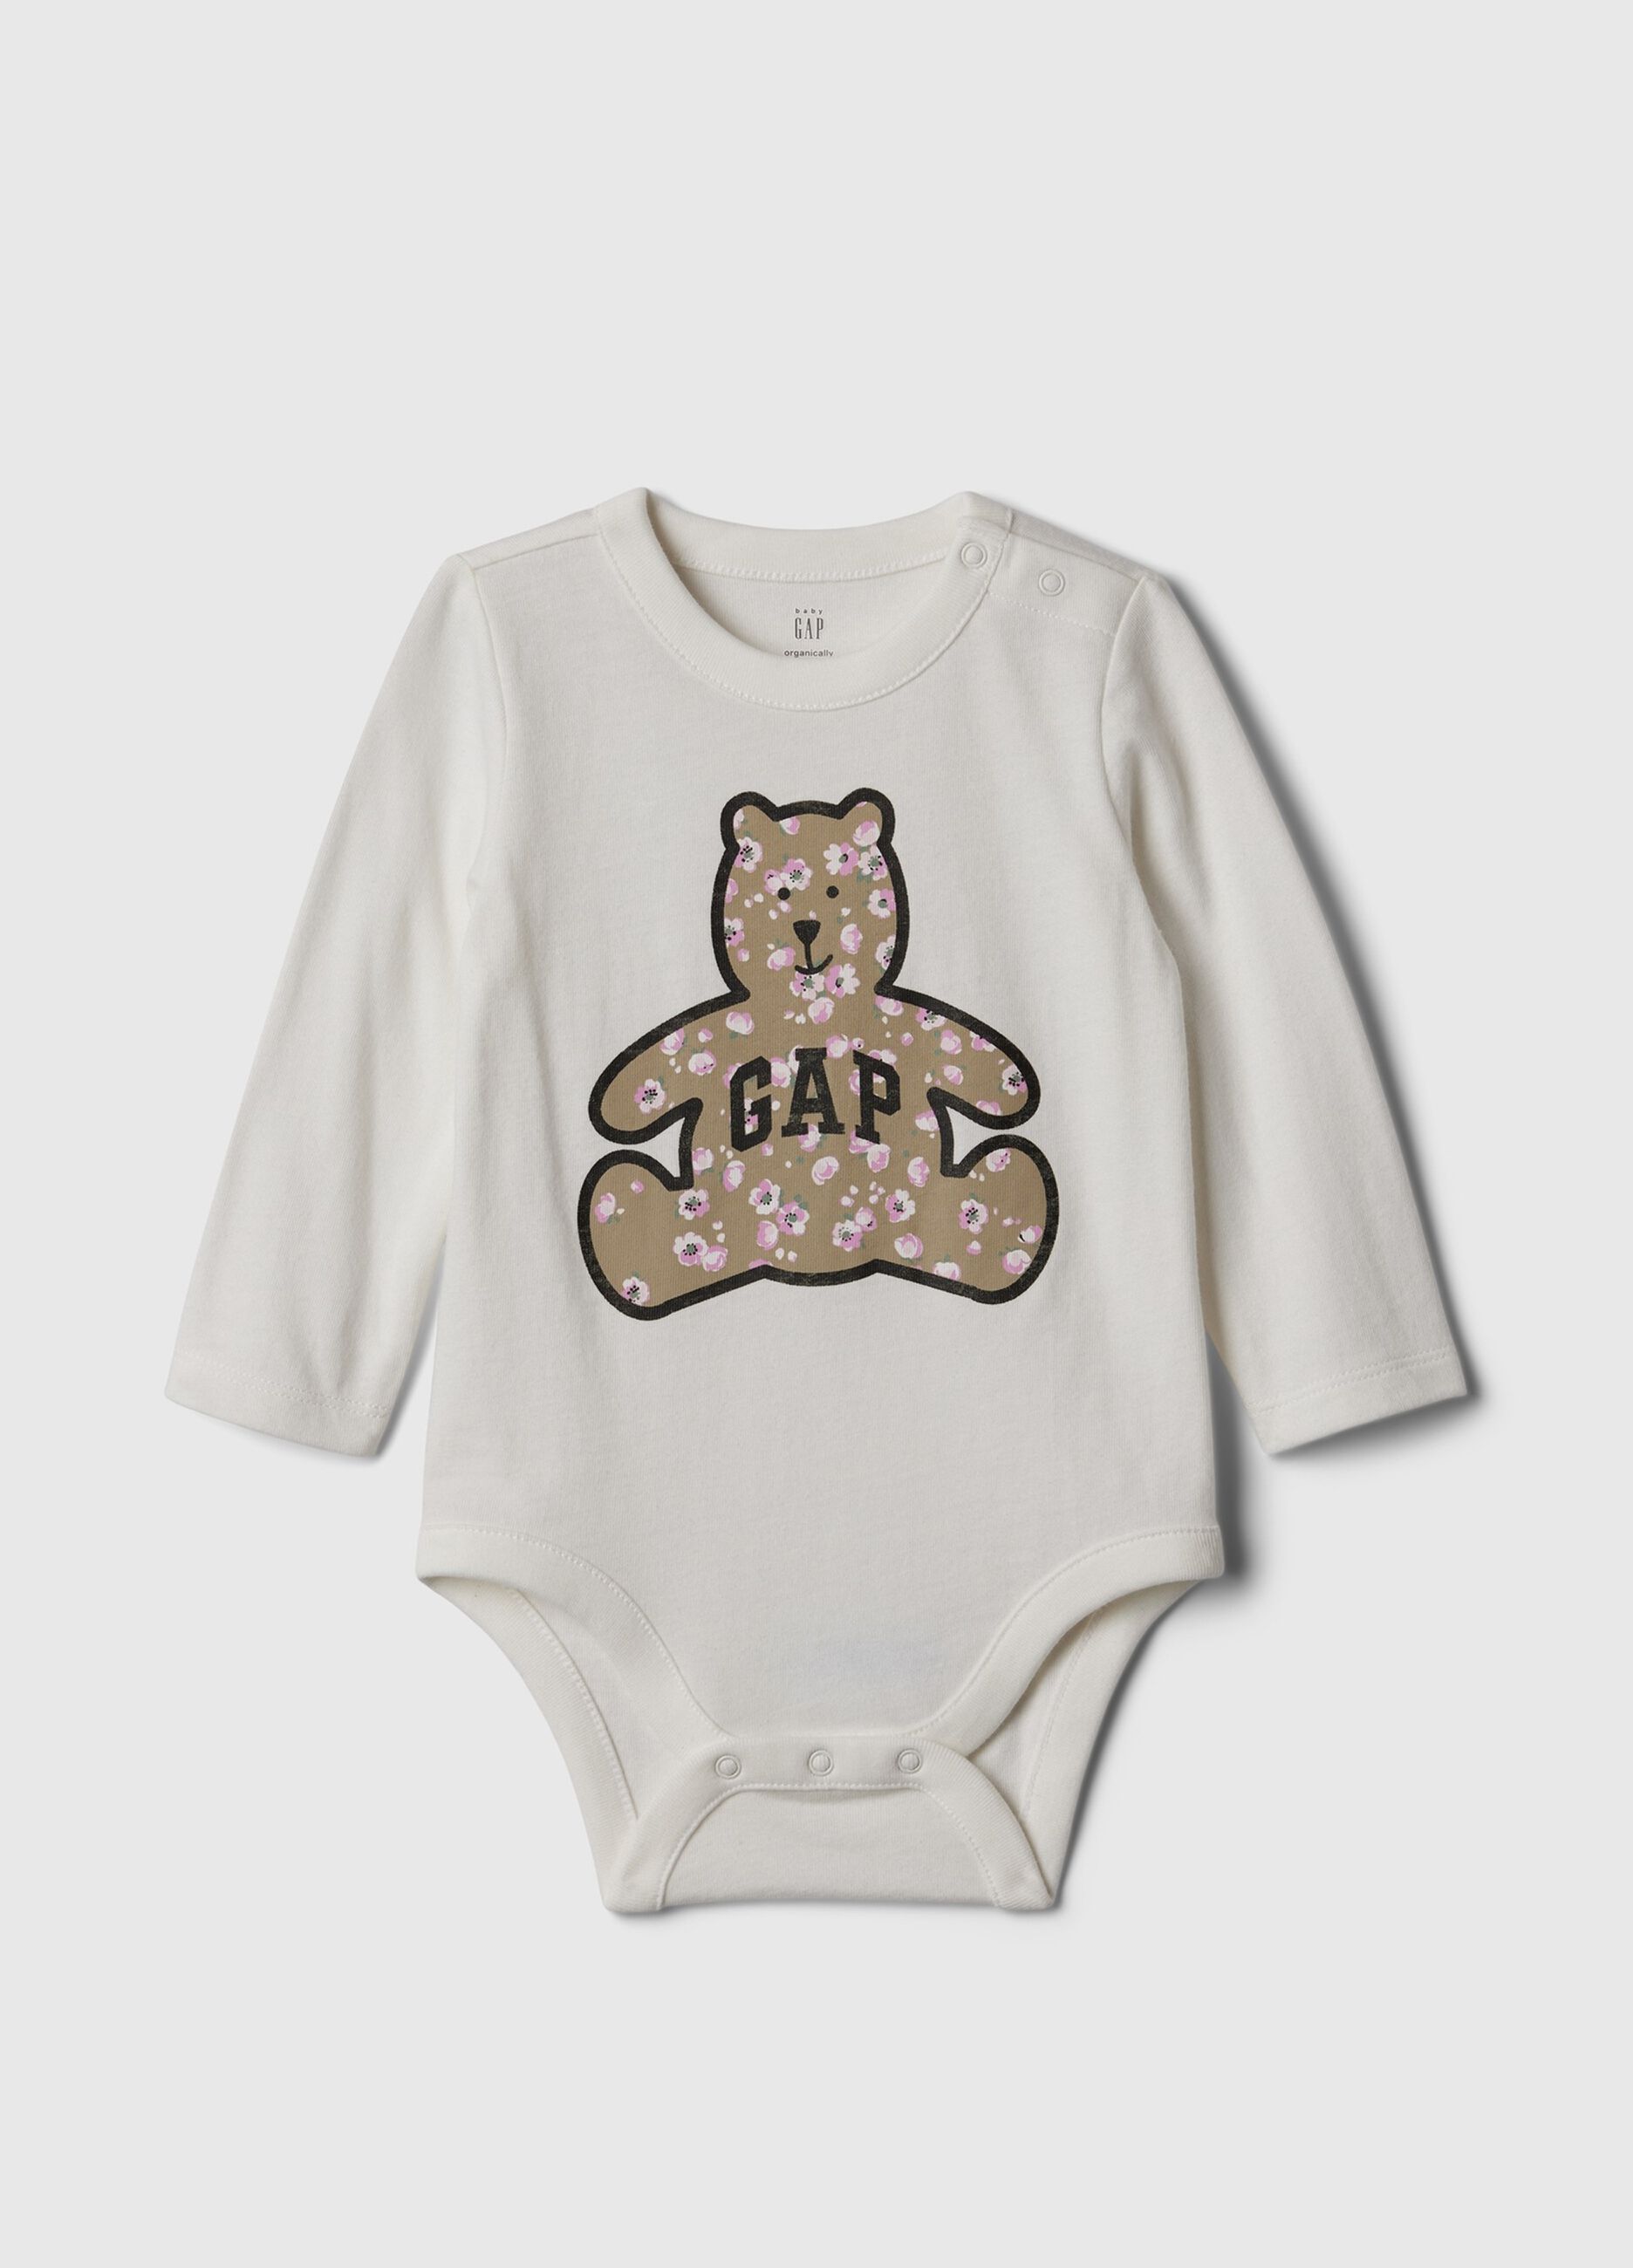 Long-sleeved bodysuit with teddy bear print and logo